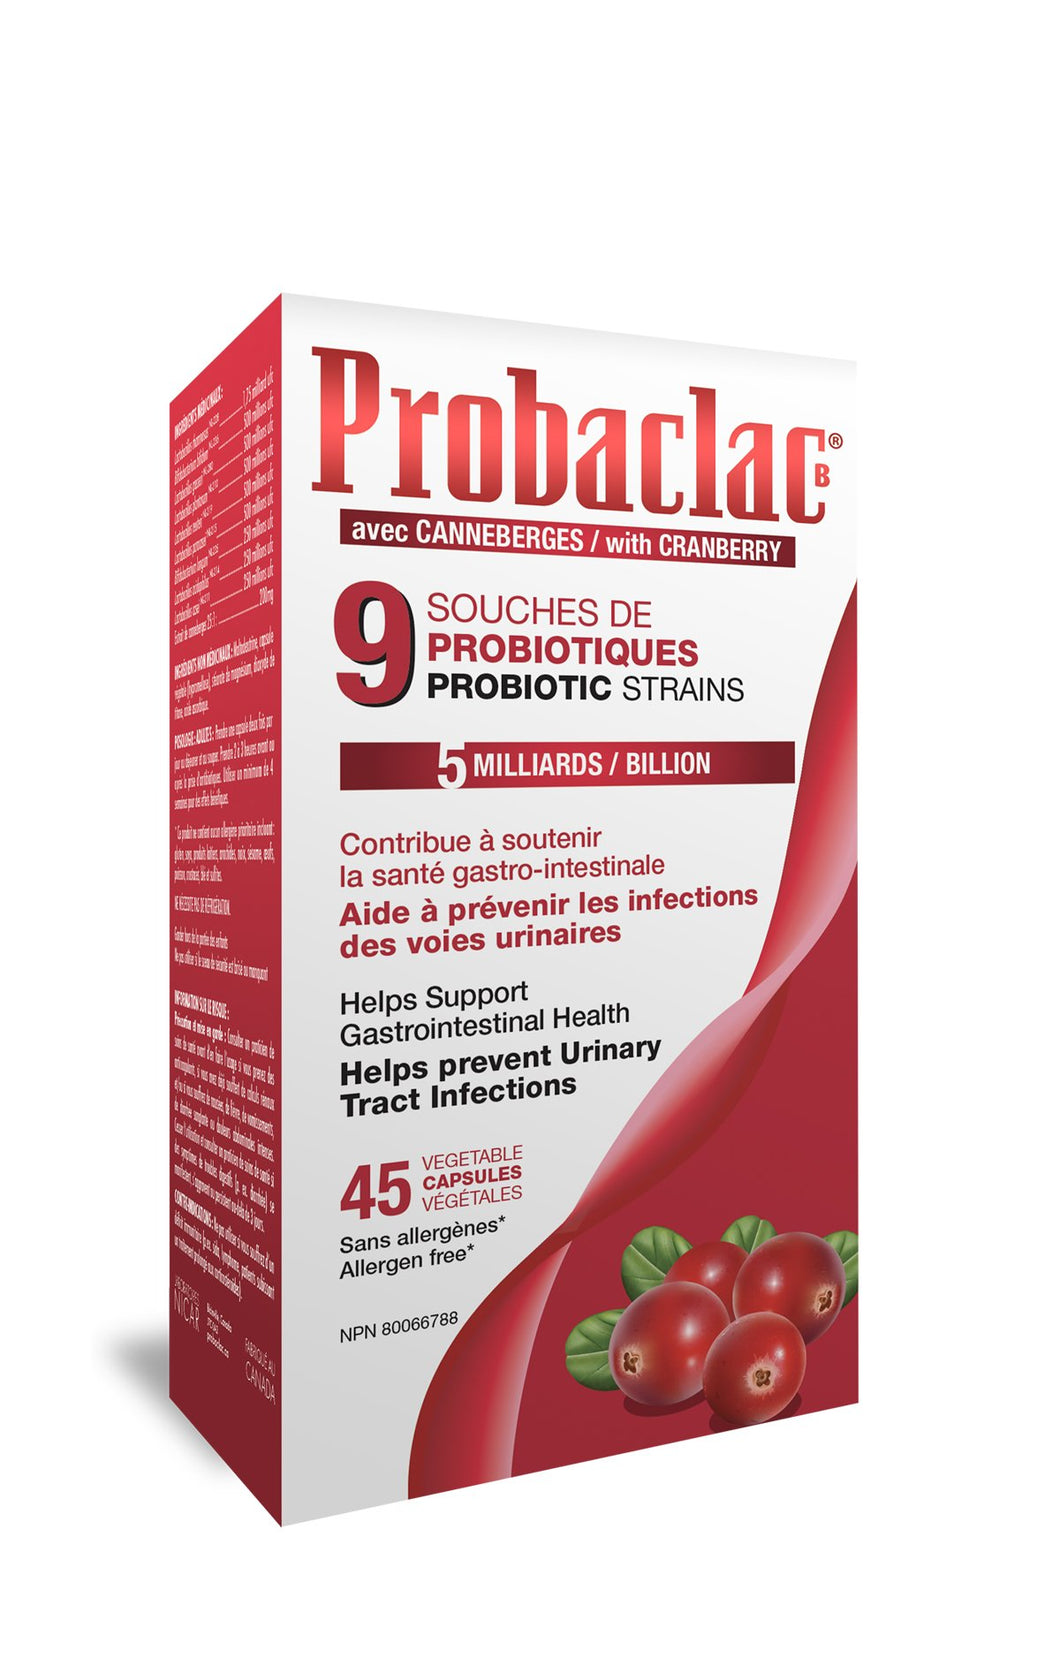 Probaclac cranberries- Probiotics for UTI